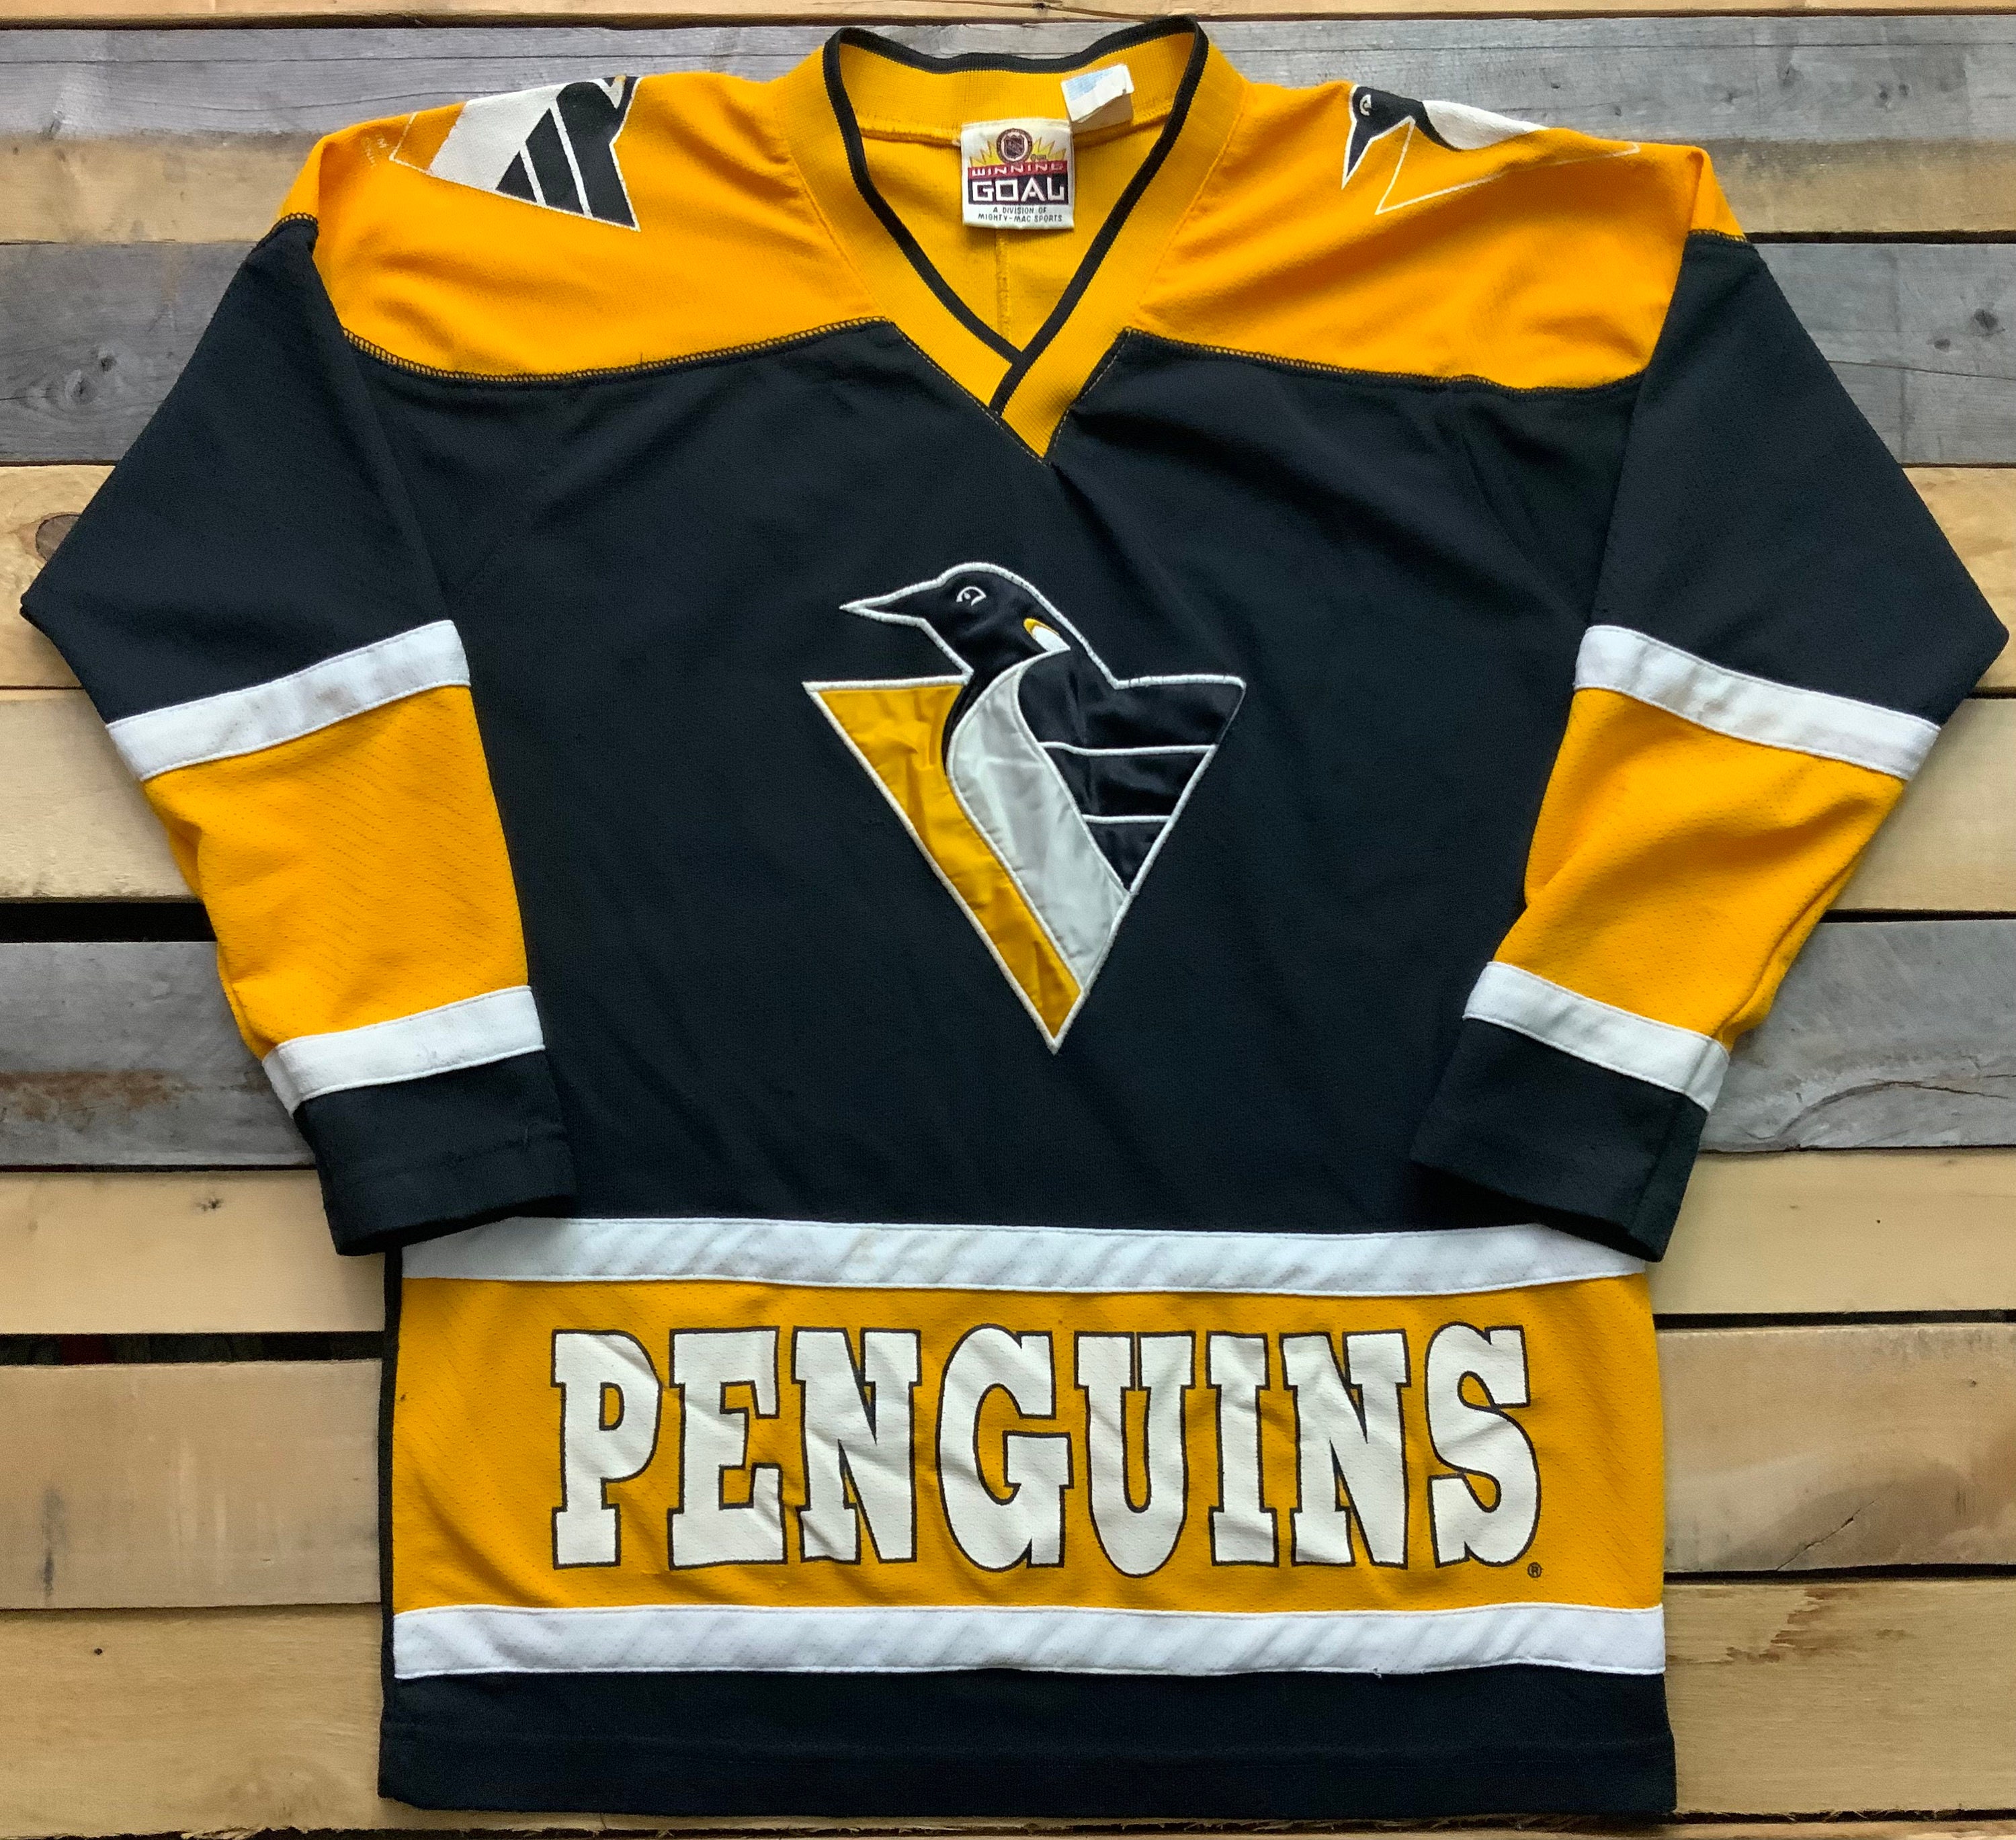  NHL Women's Pittsburgh Penguins Premier Jersey, Black, Medium  : Athletic Jerseys : Sports & Outdoors